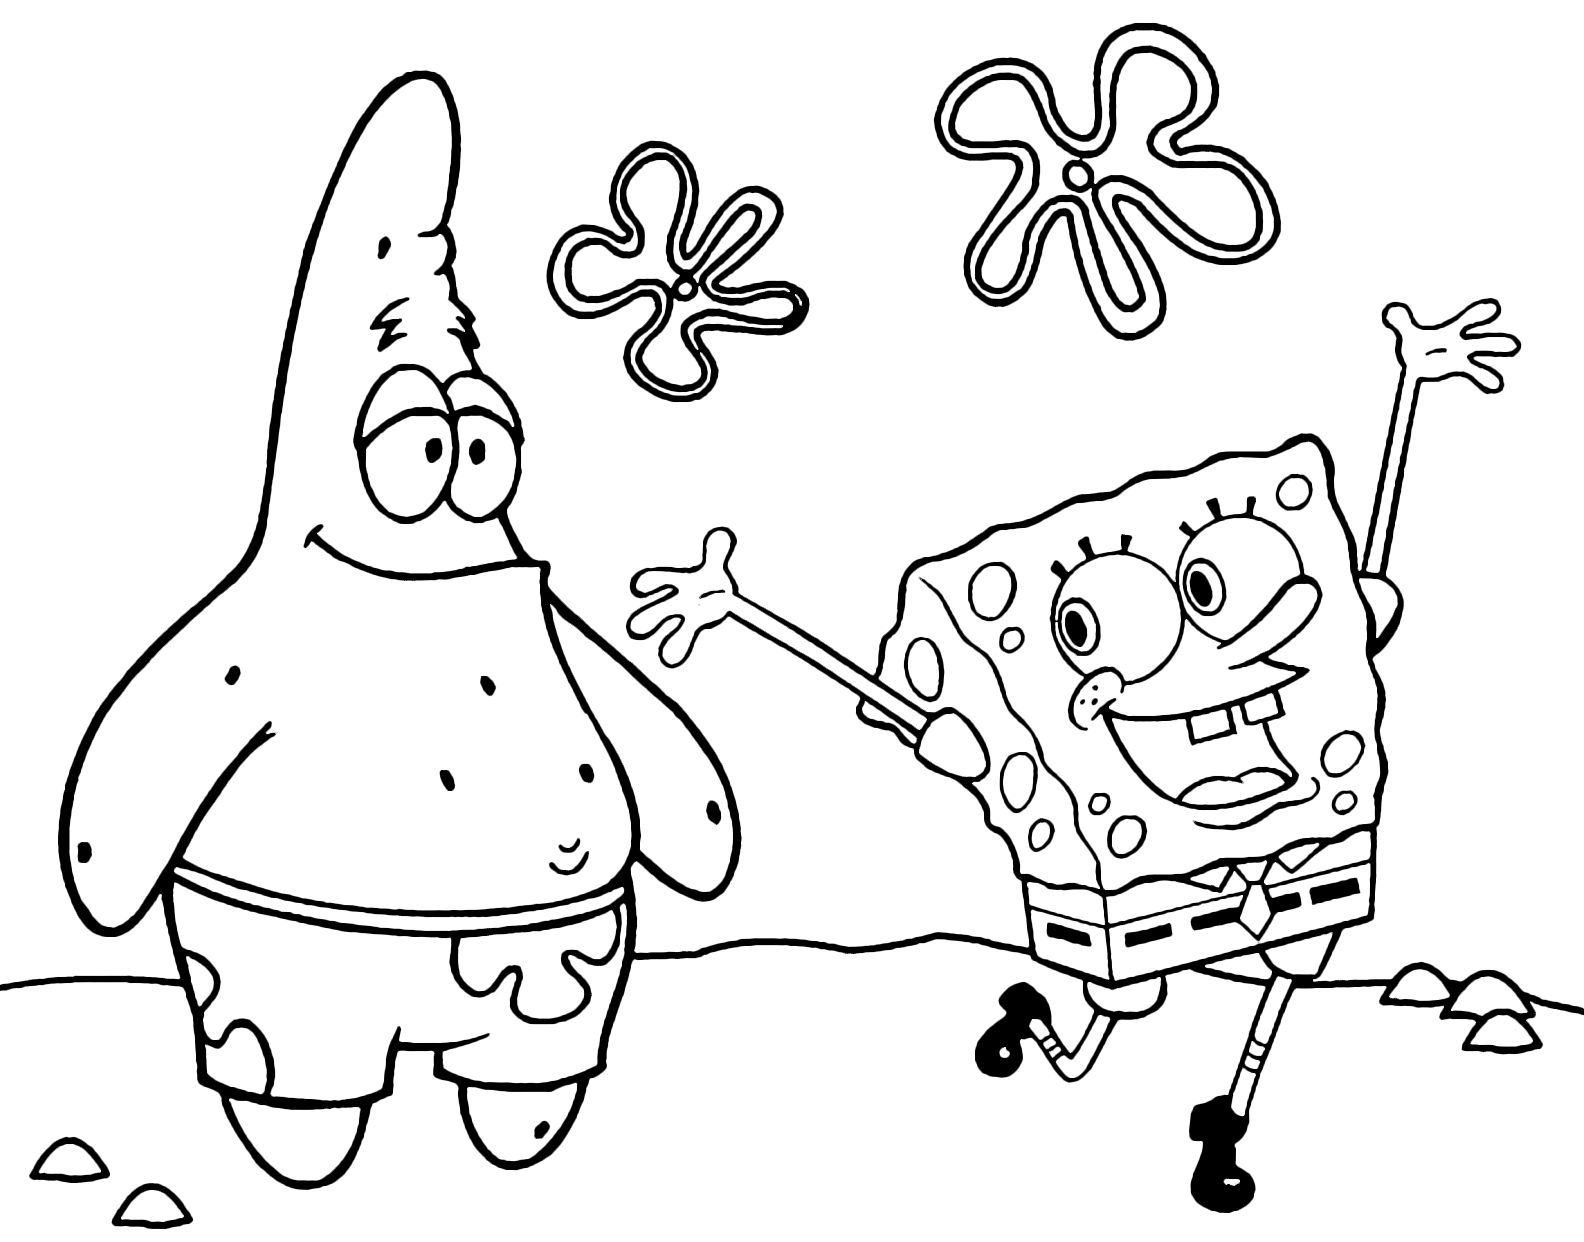 Spongebob Spongebob Plays Happy With His Best Friend Patrick Star